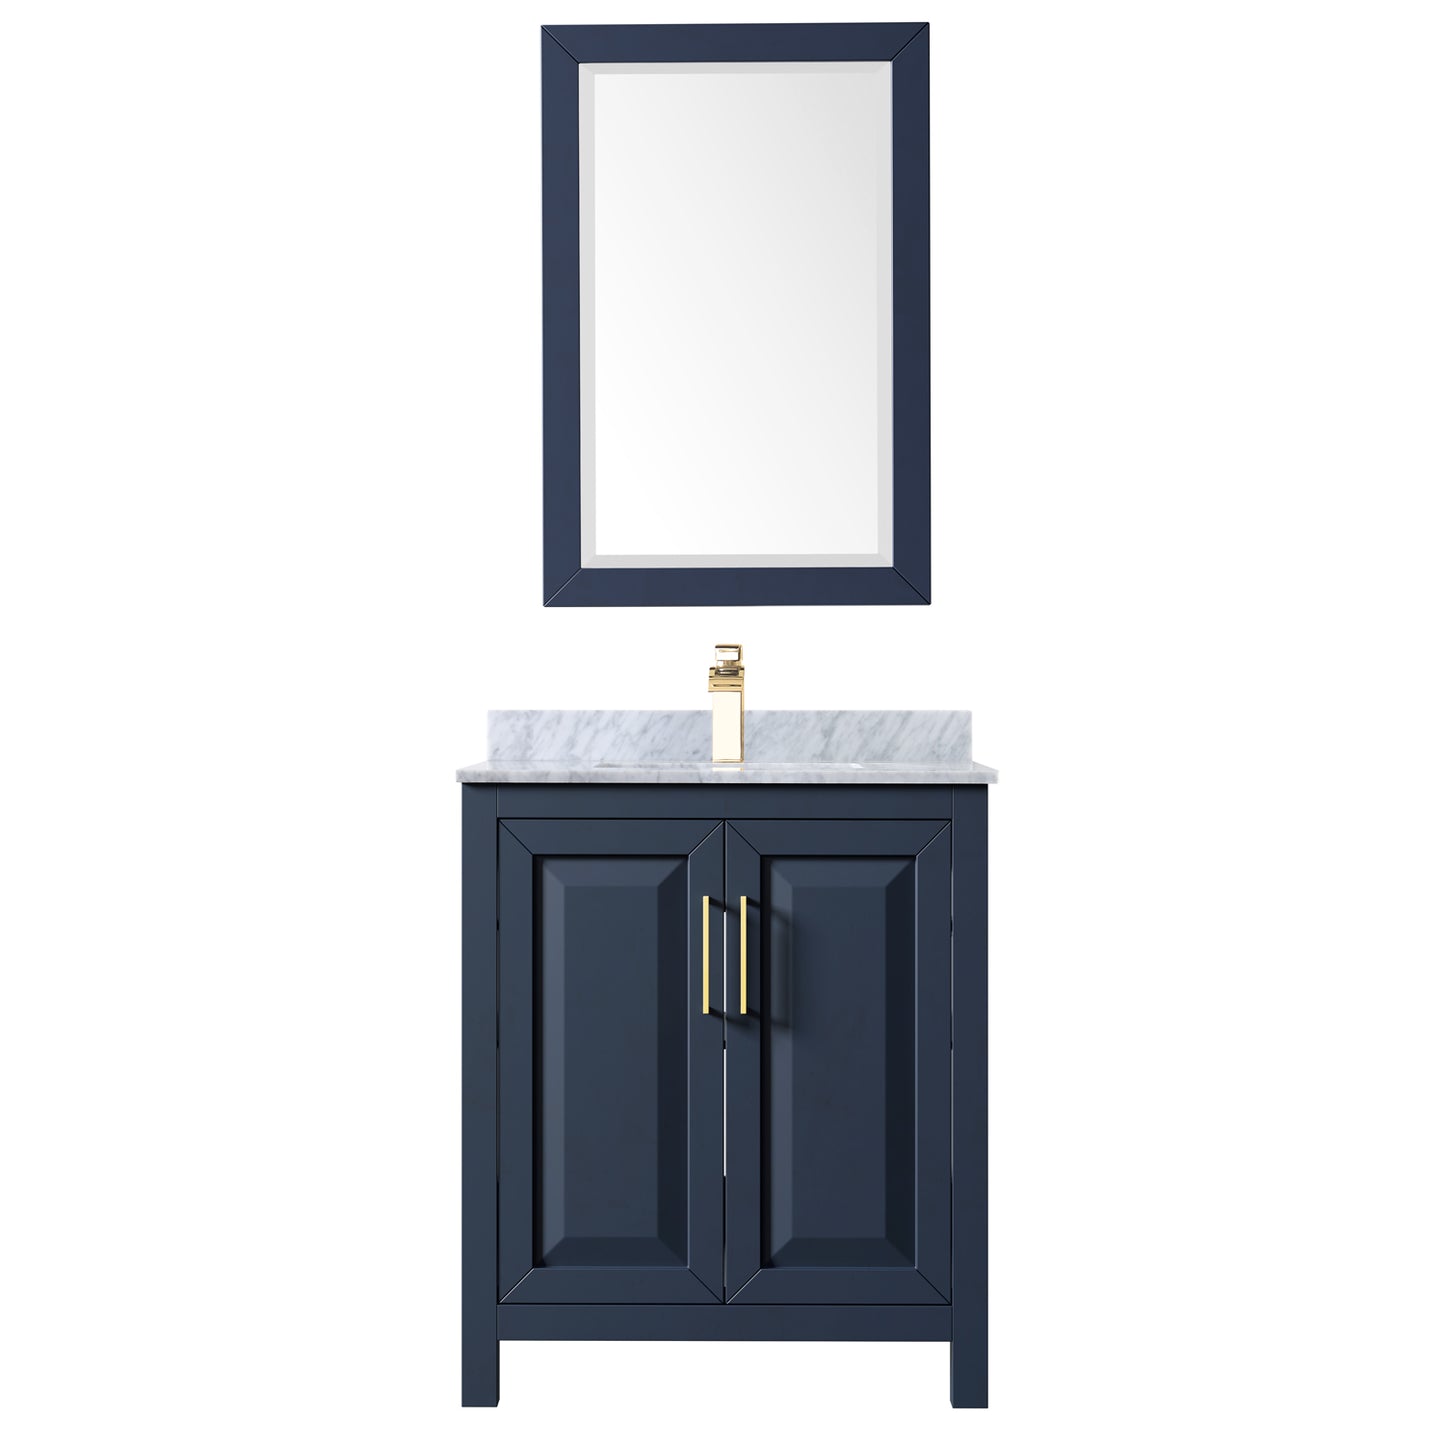 30 Inch Single Bathroom Vanity in Dark Blue, White Carrara Marble Countertop, Undermount Square Sink, 24 Inch Mirror - Luxe Bathroom Vanities Luxury Bathroom Fixtures Bathroom Furniture